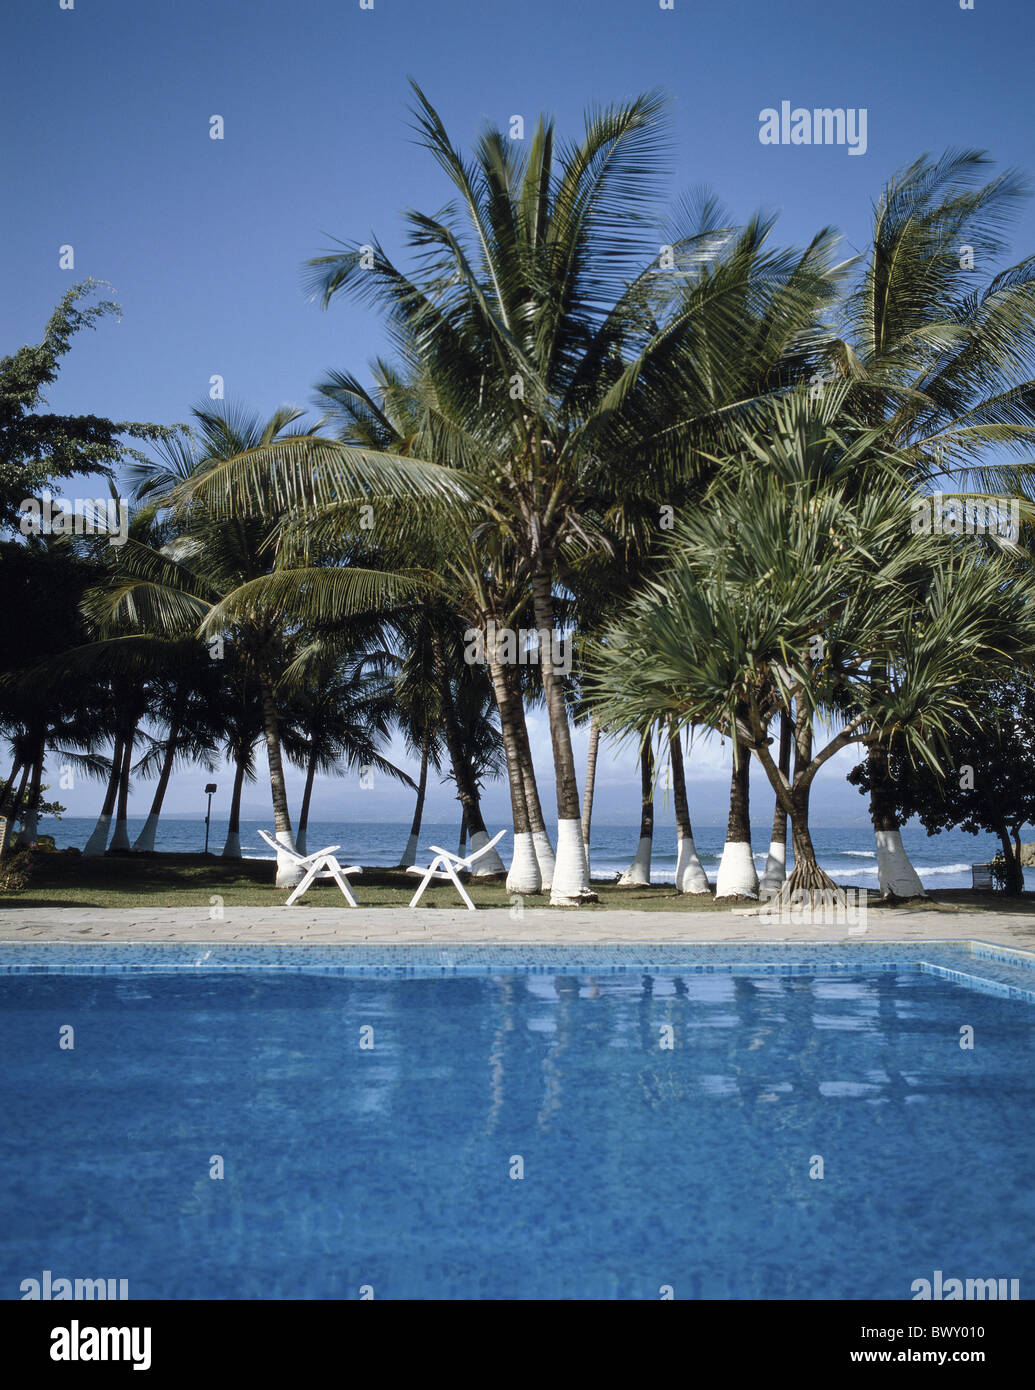 Guadeloupe Karibik Hotel Liegestühle Meer Palmen Swimmingpool pool Stockfoto